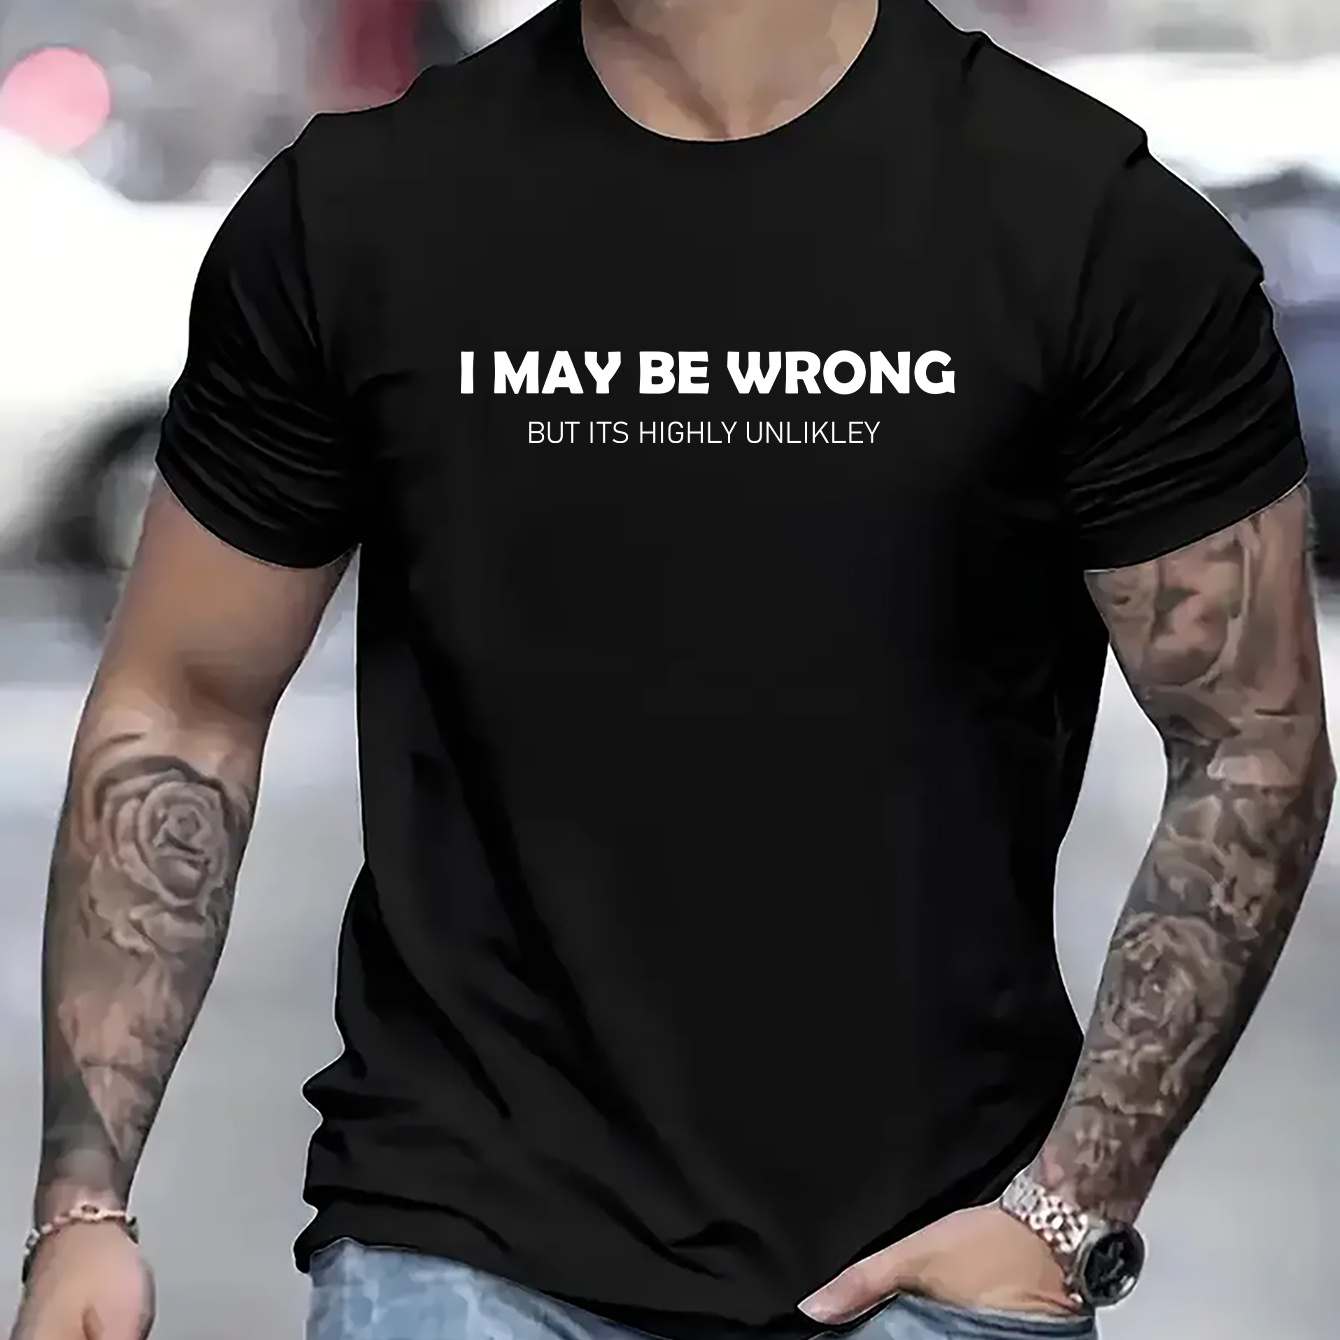 

I May Be Wrong Print T Shirt, Tees For Men, Casual Short Sleeve T-shirt For Summer